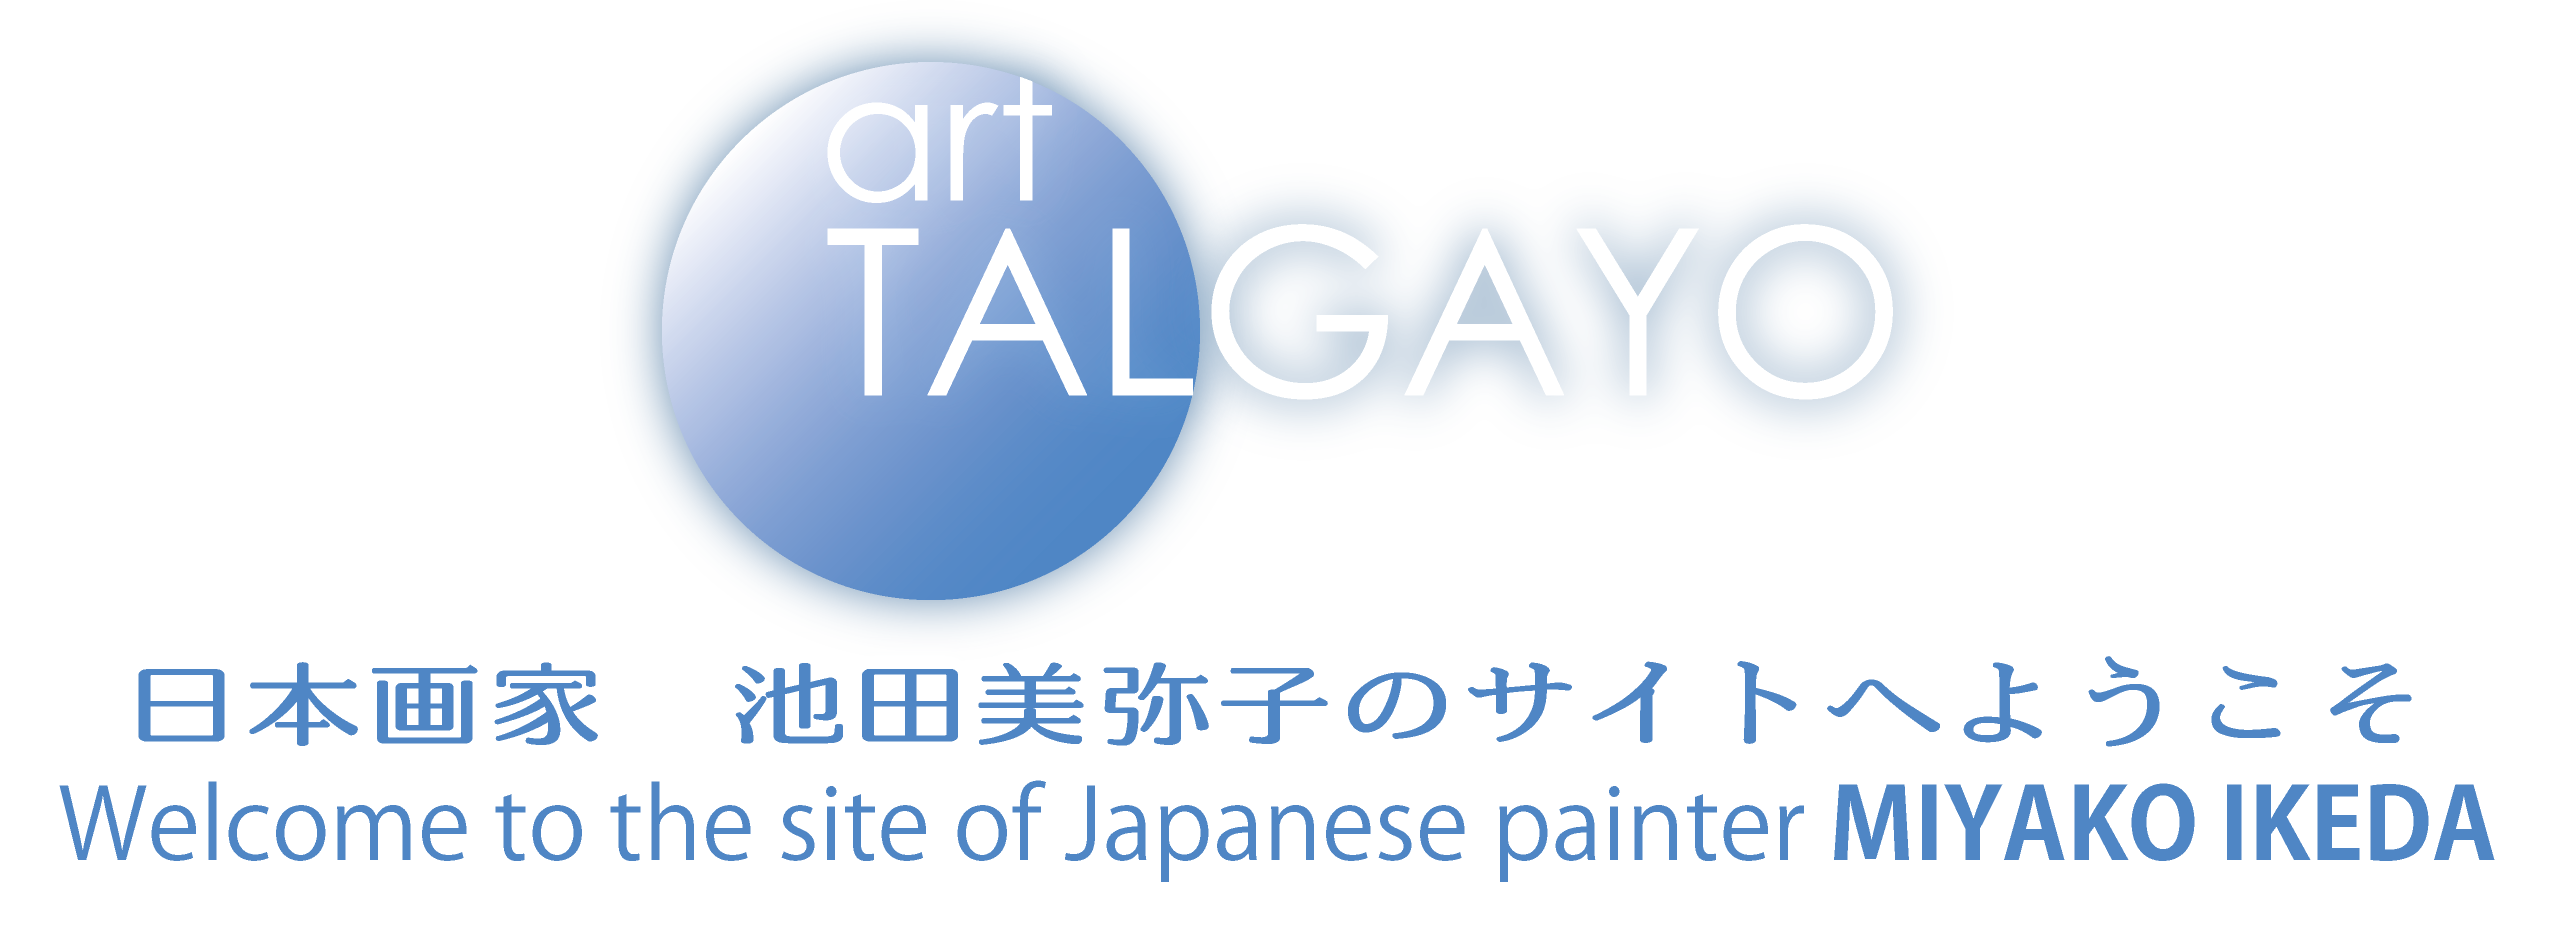 art.talgayo.com